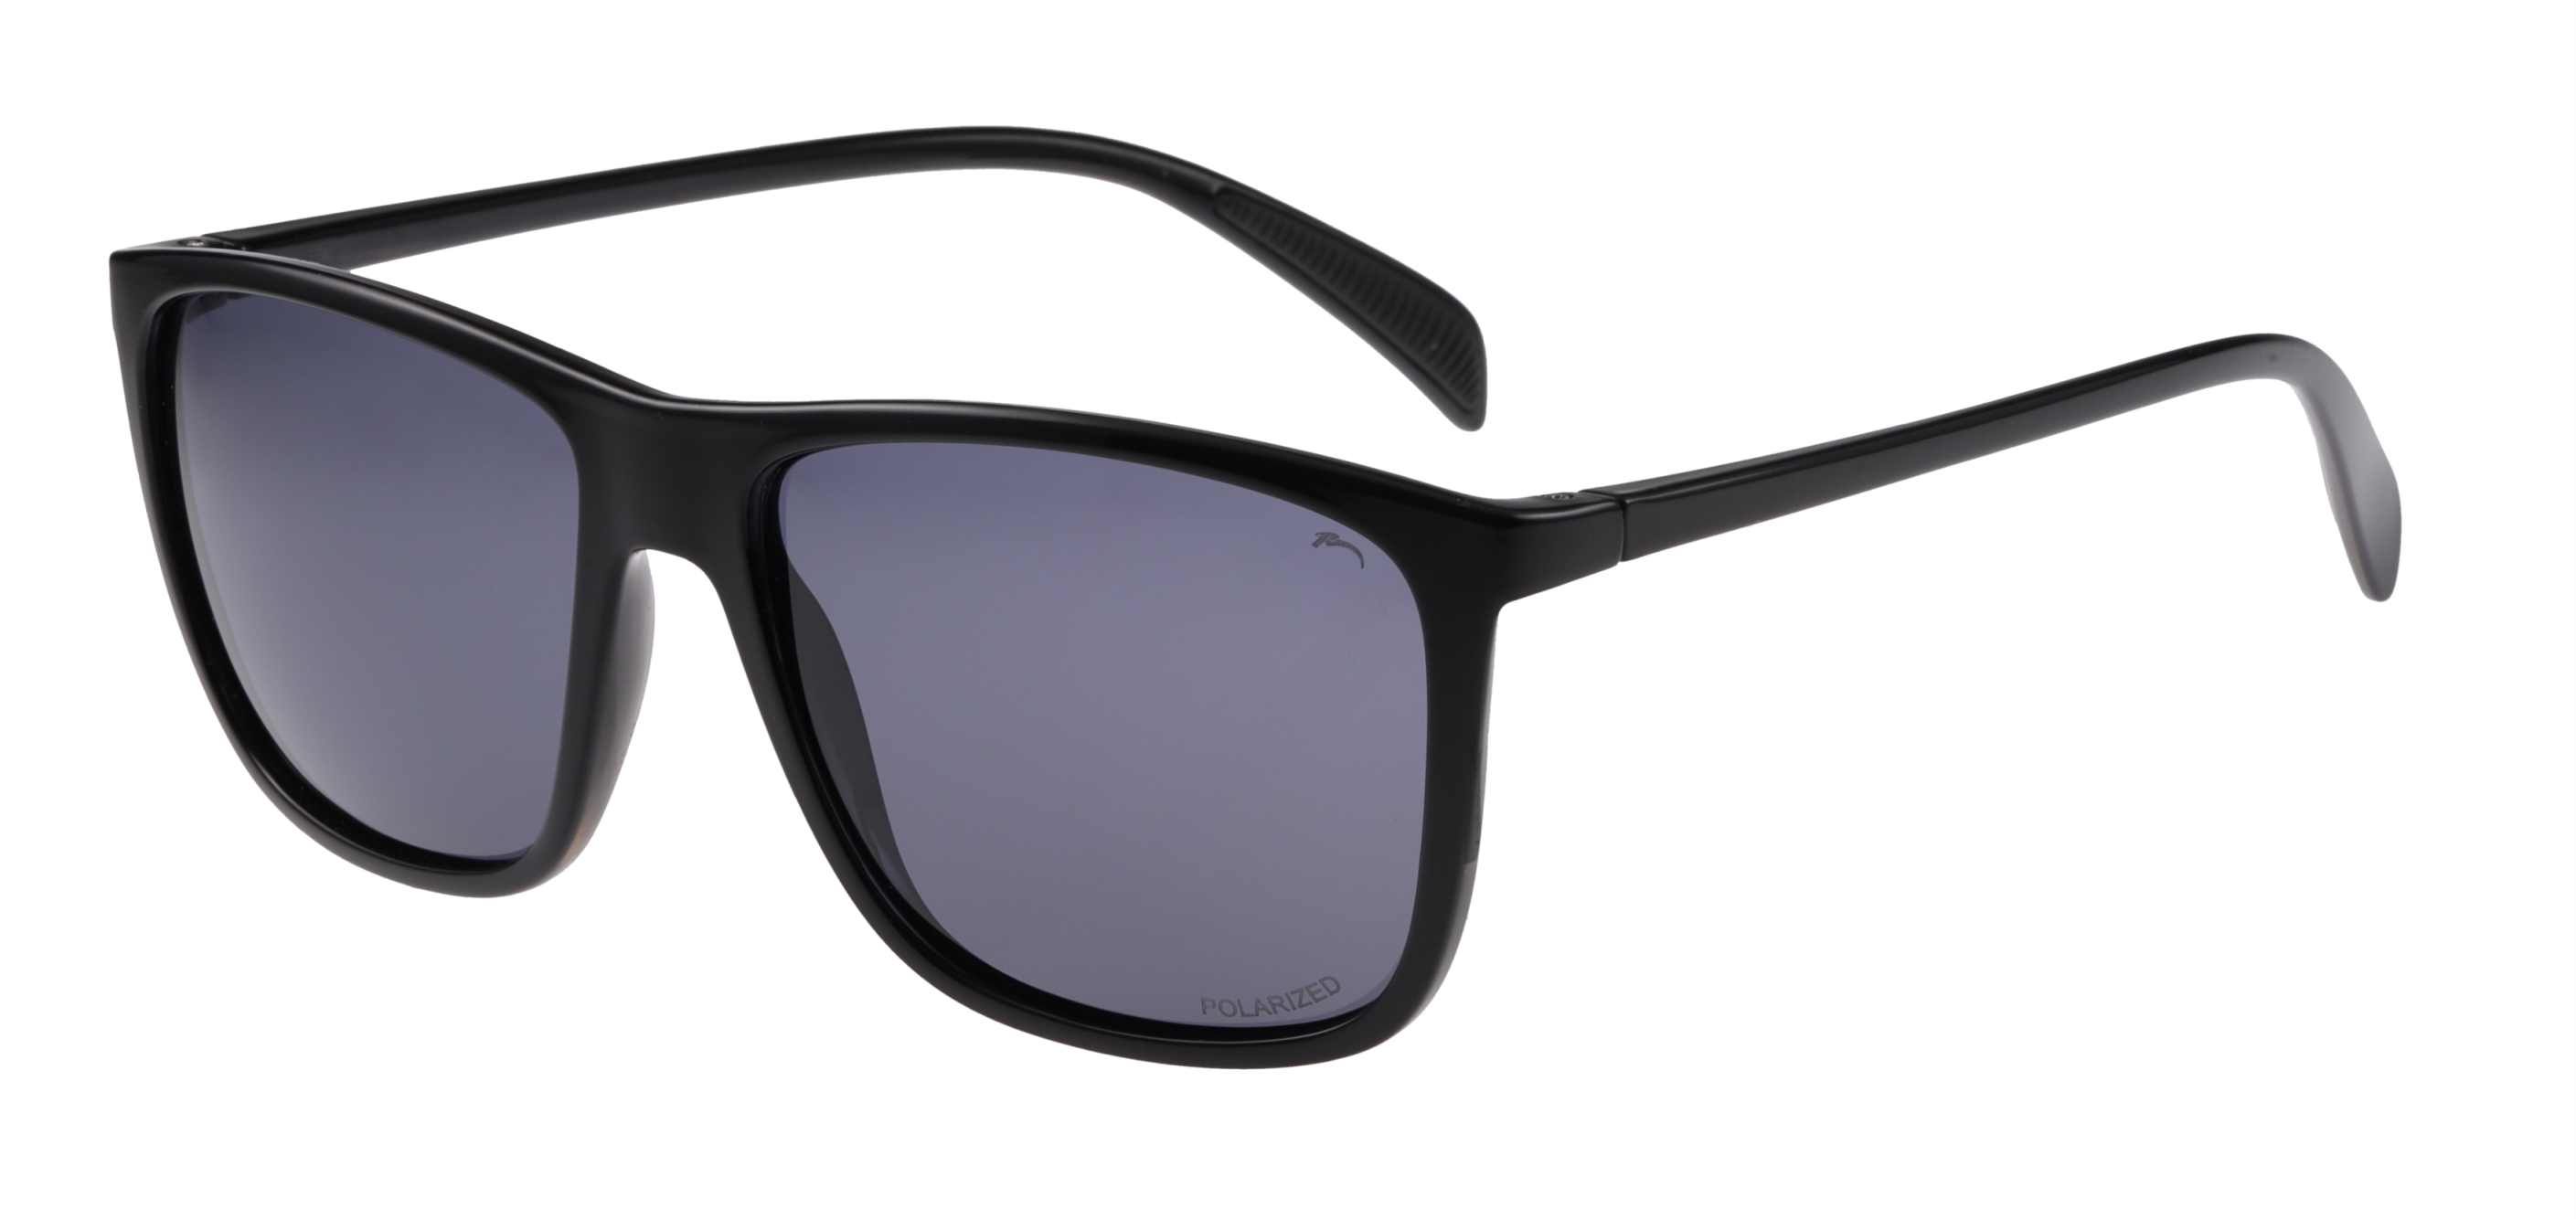 Polarized sunglasses  Relax Dubbo R2357A standard